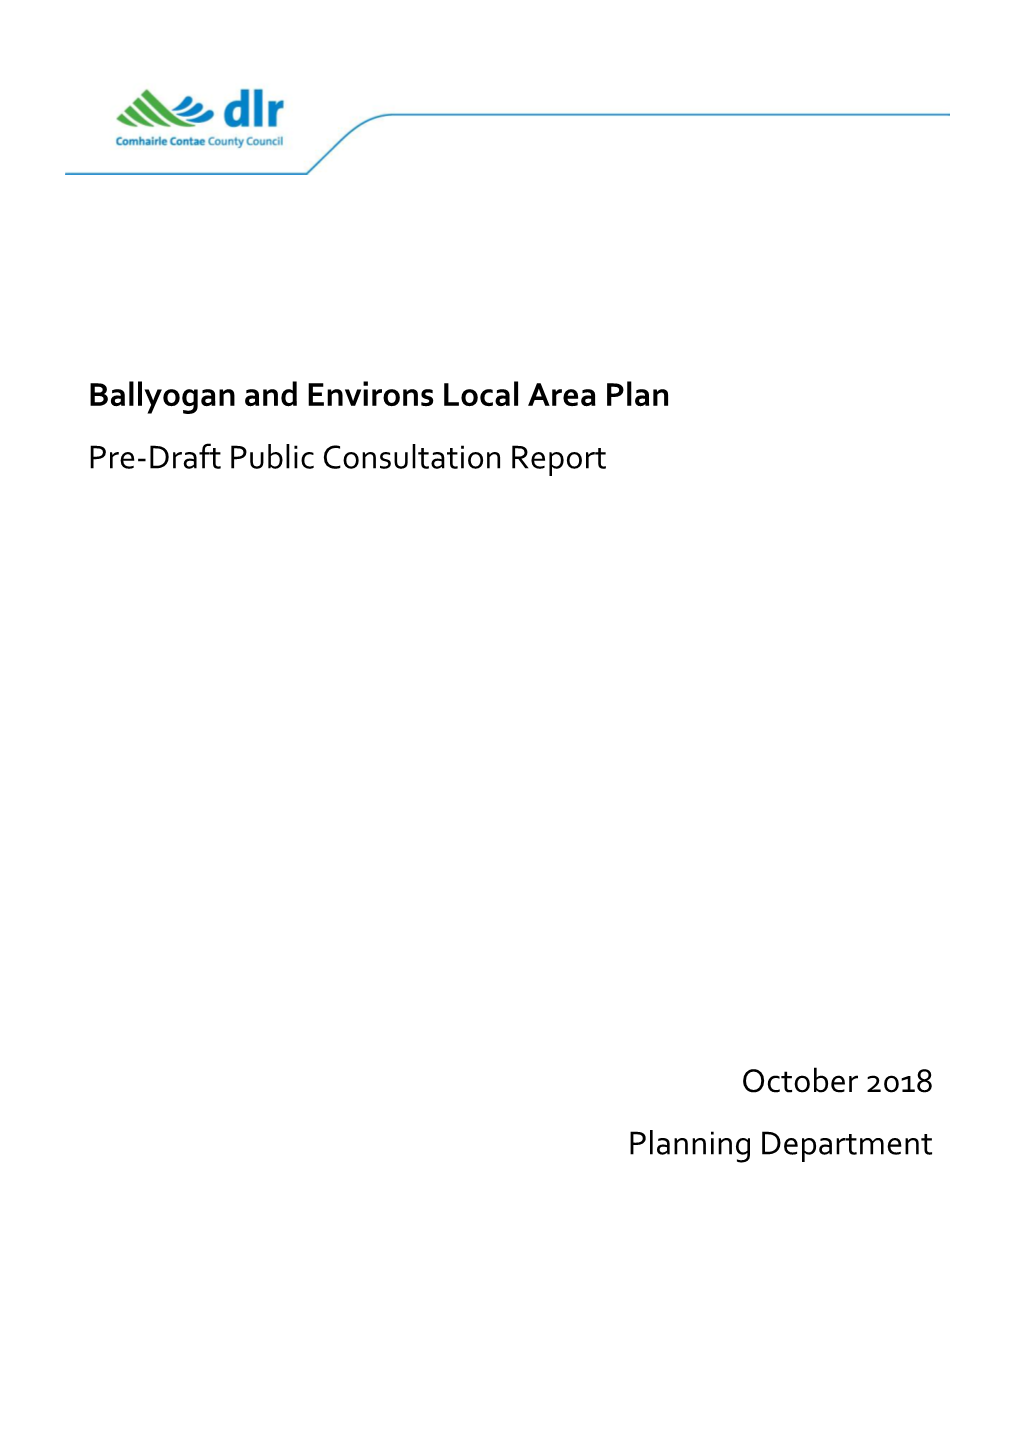 Ballyogan and Environs Local Area Plan Pre-Draft Public Consultation Report